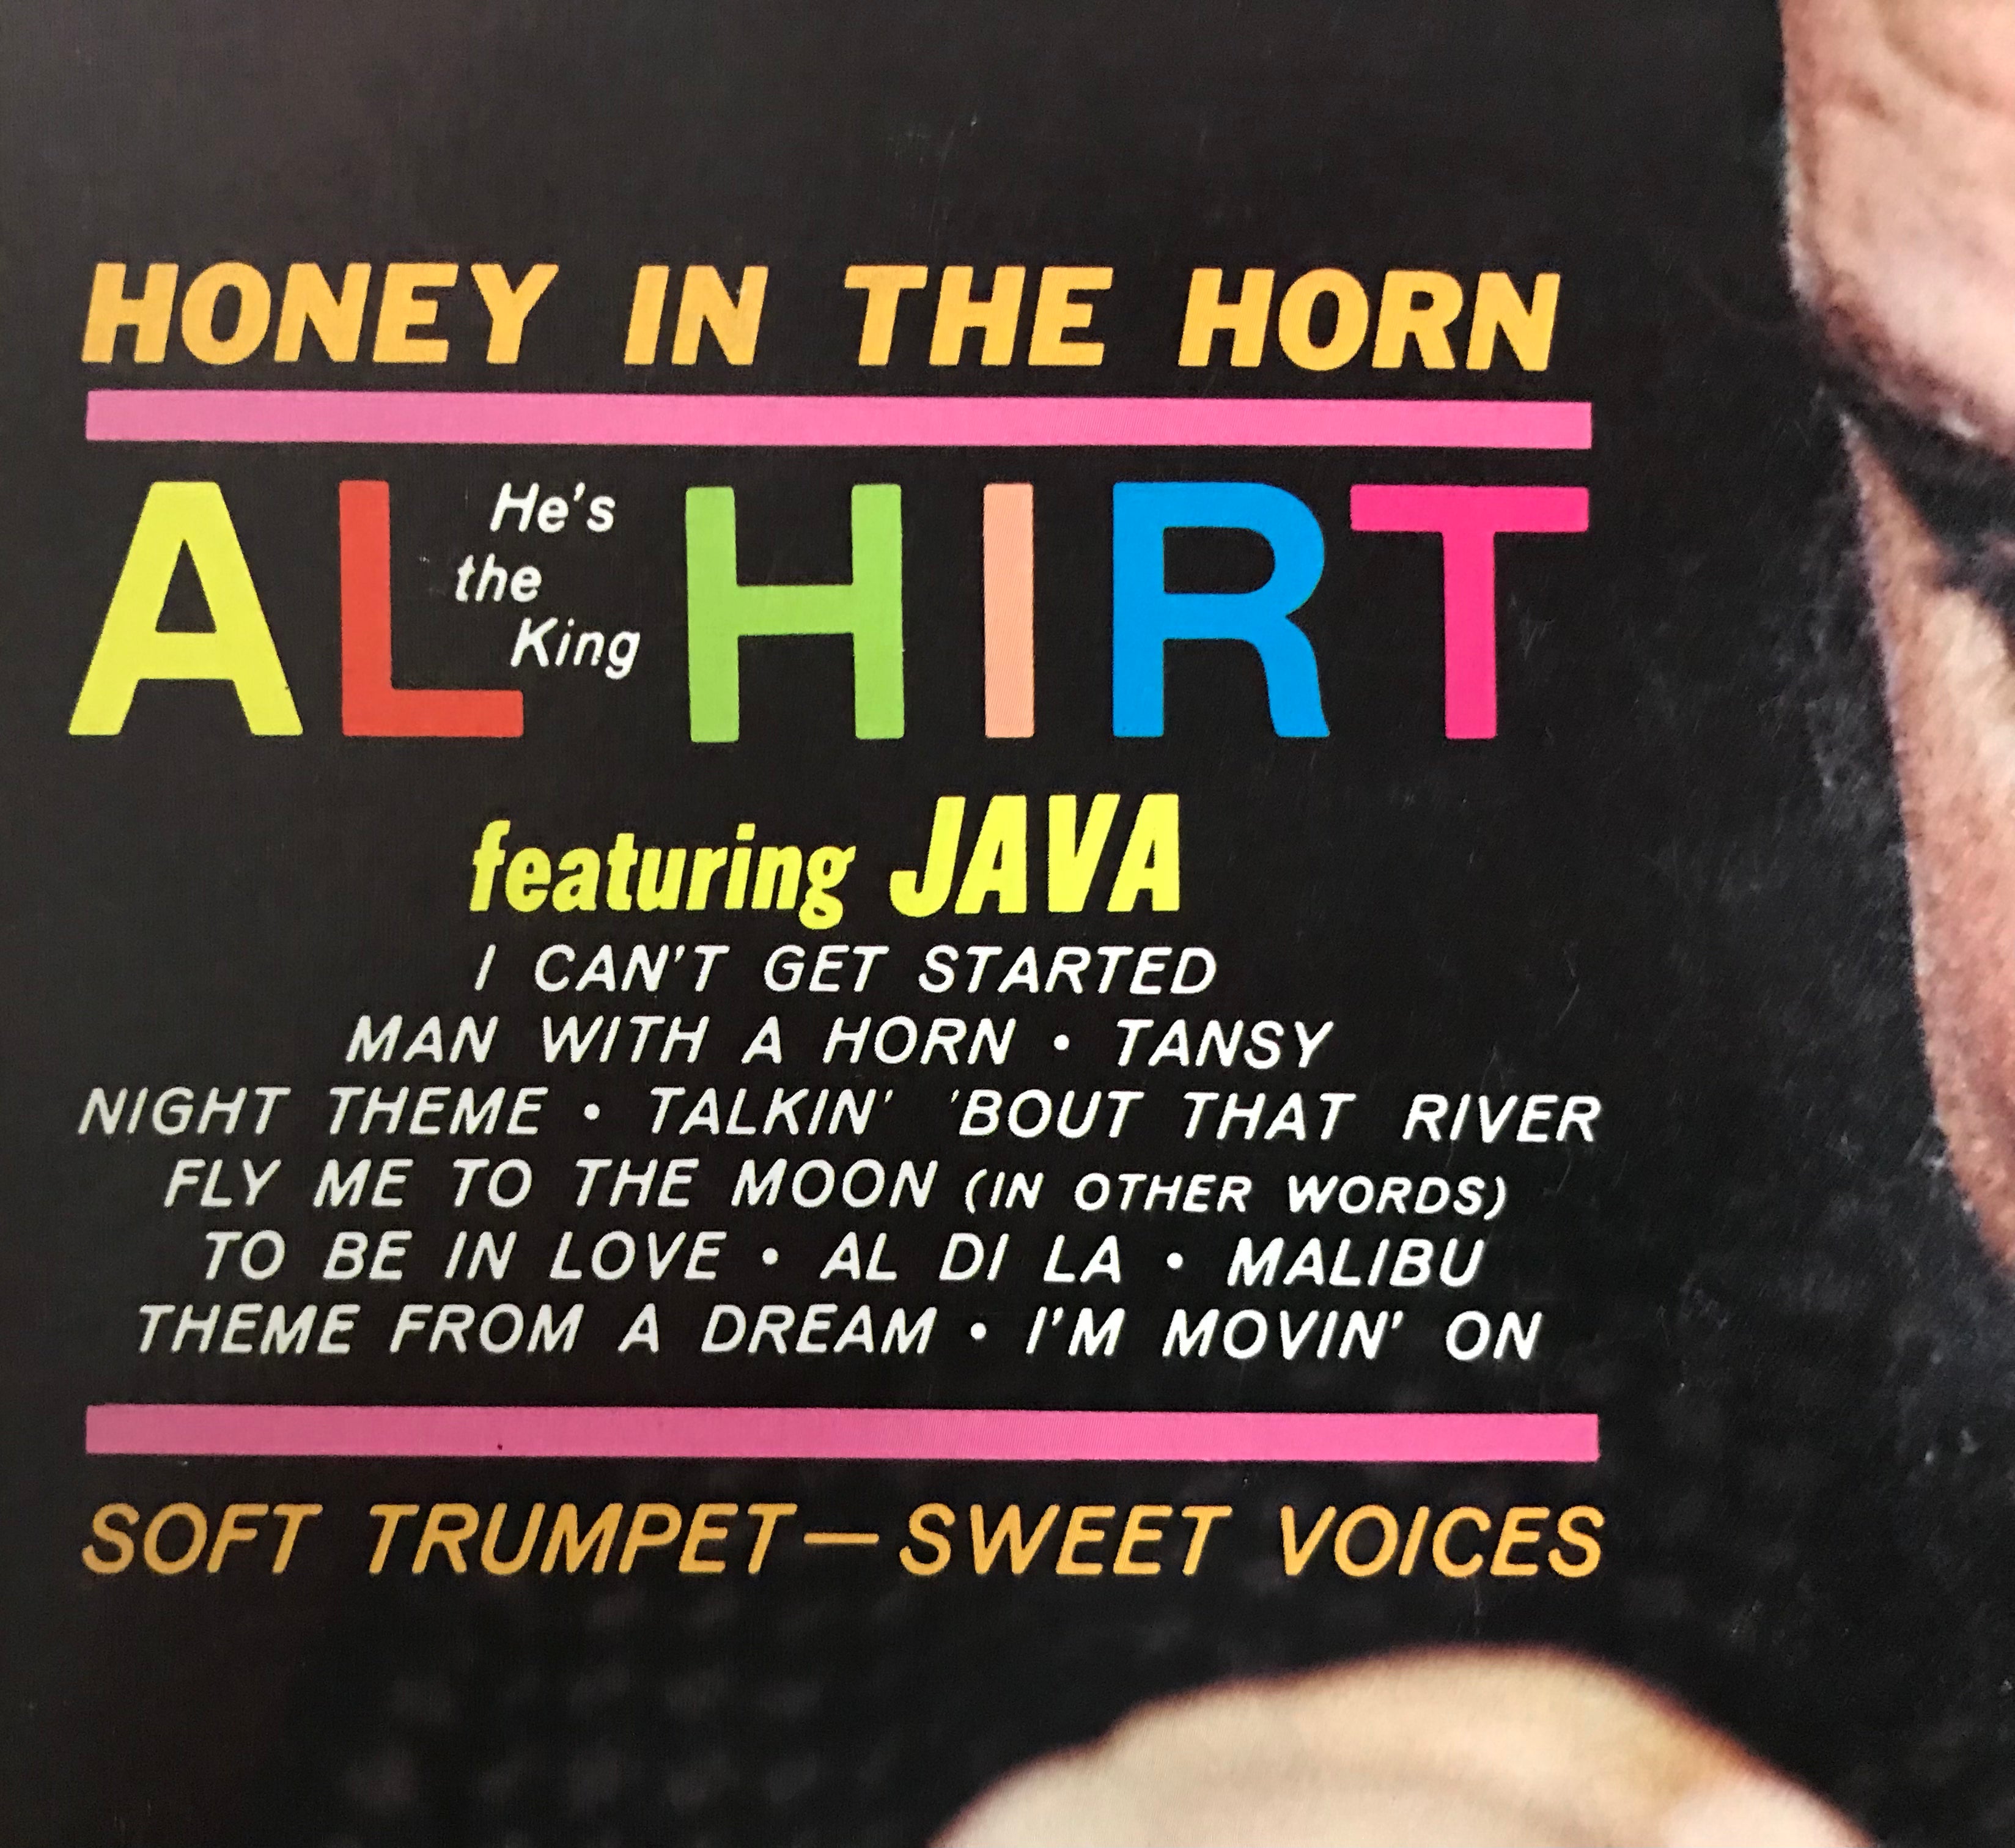 Al Hirt Honey In The Horn Album Cover Notebook